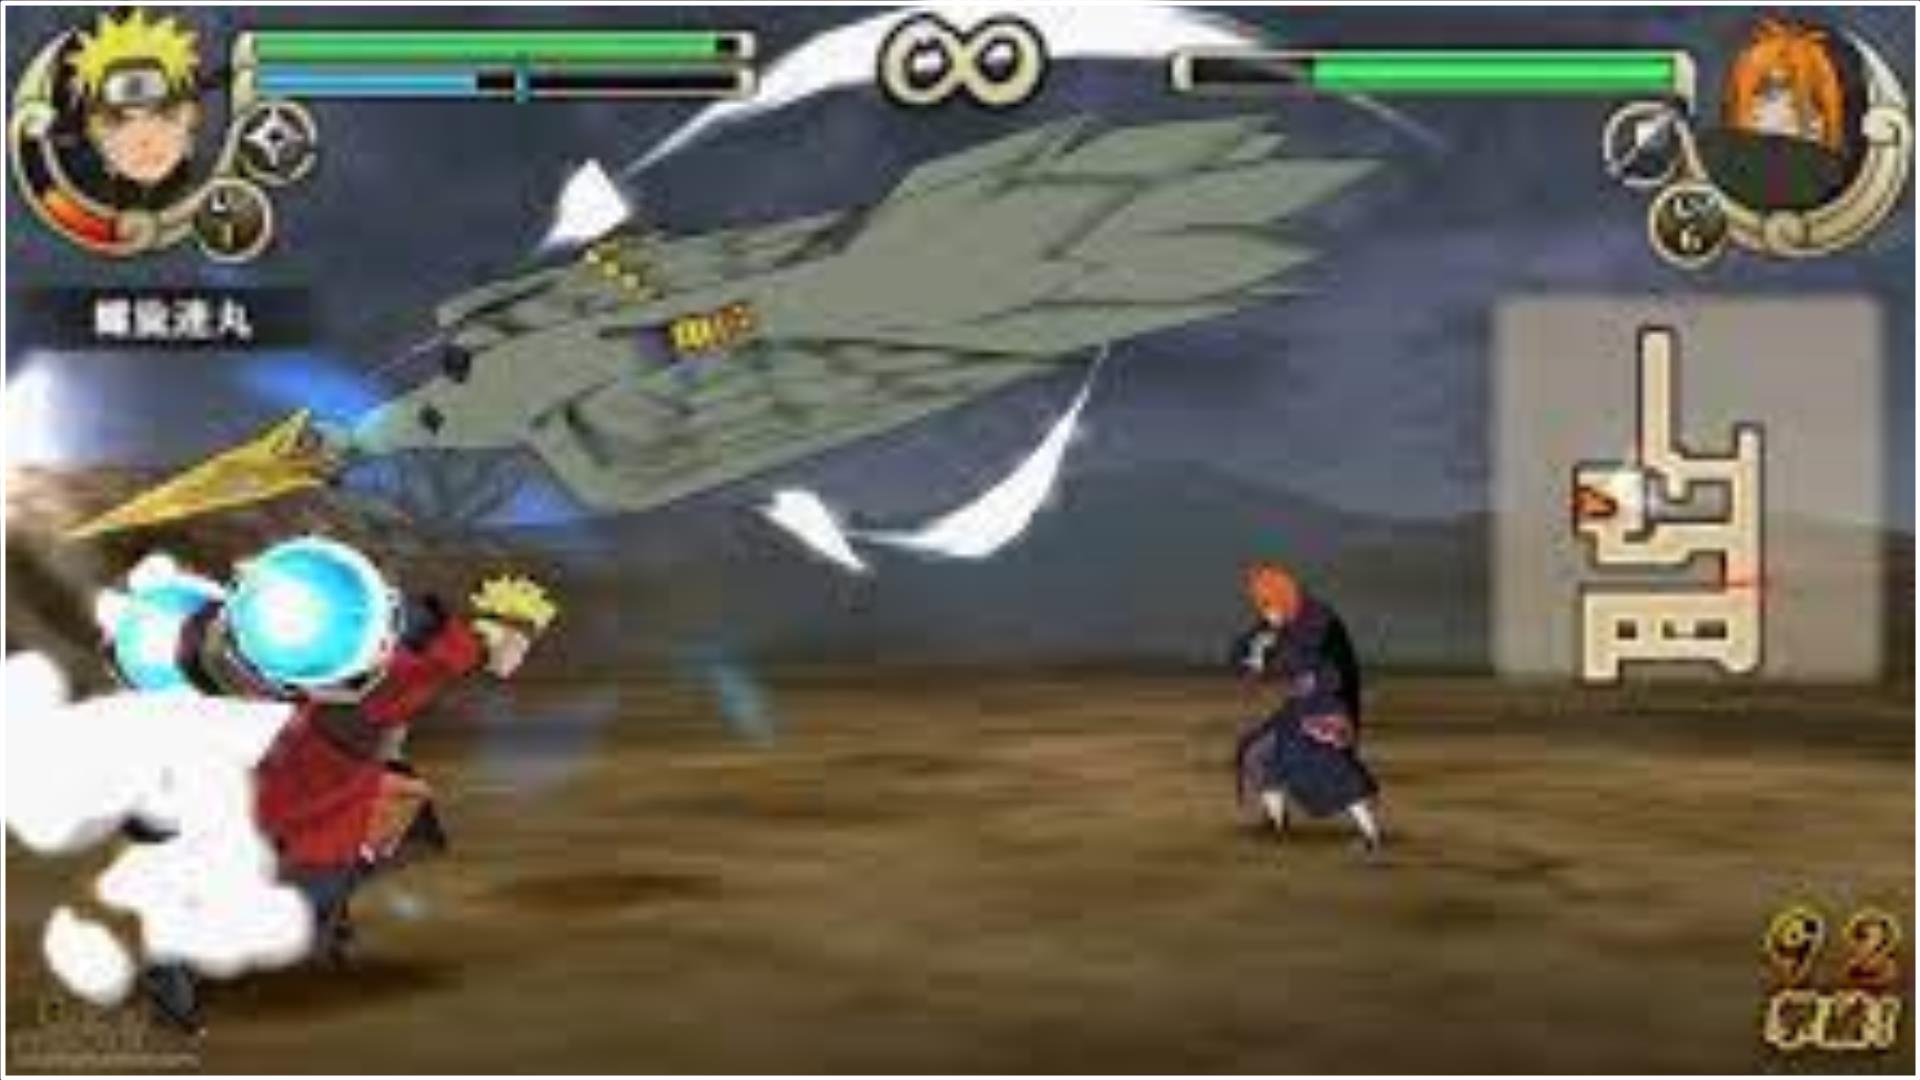 Naruto Shippuden - Ultimate Ninja Impact ROM - PSP Download